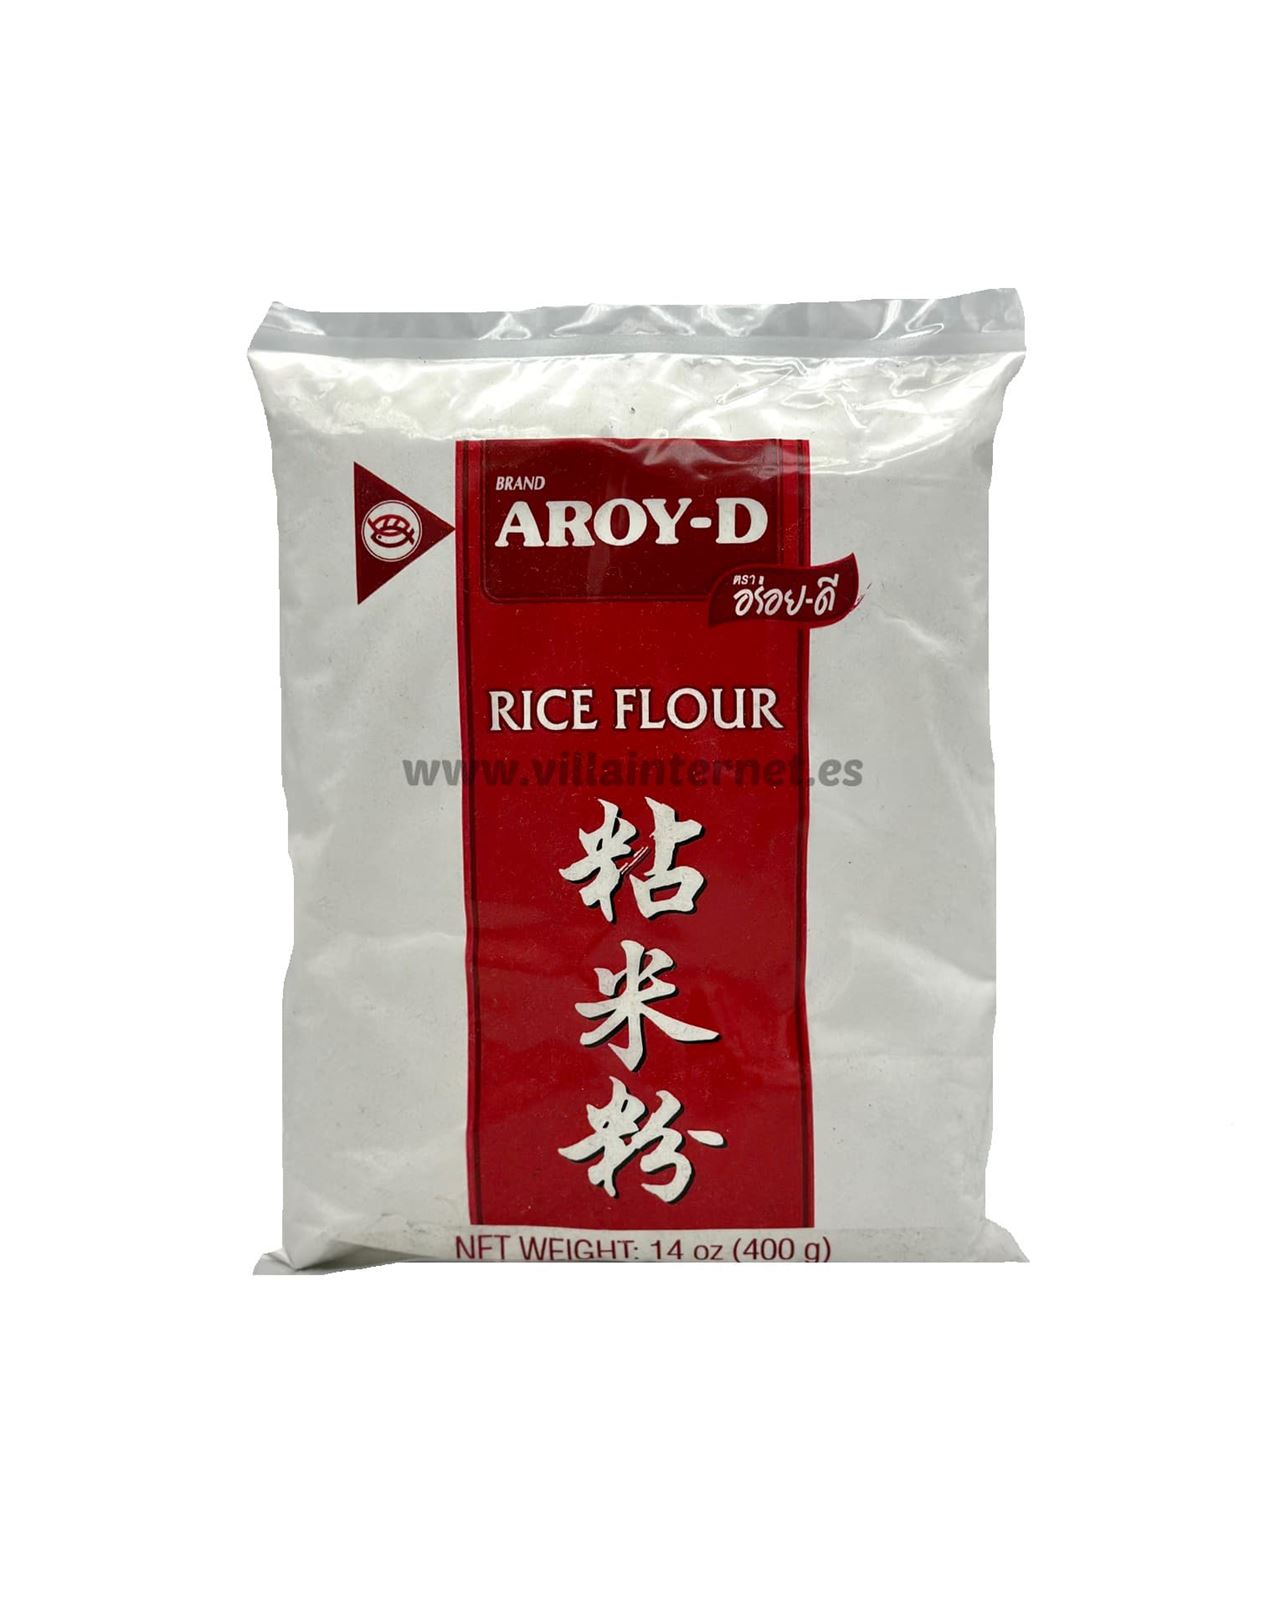 Harina de arroz 400g - Imagen 1